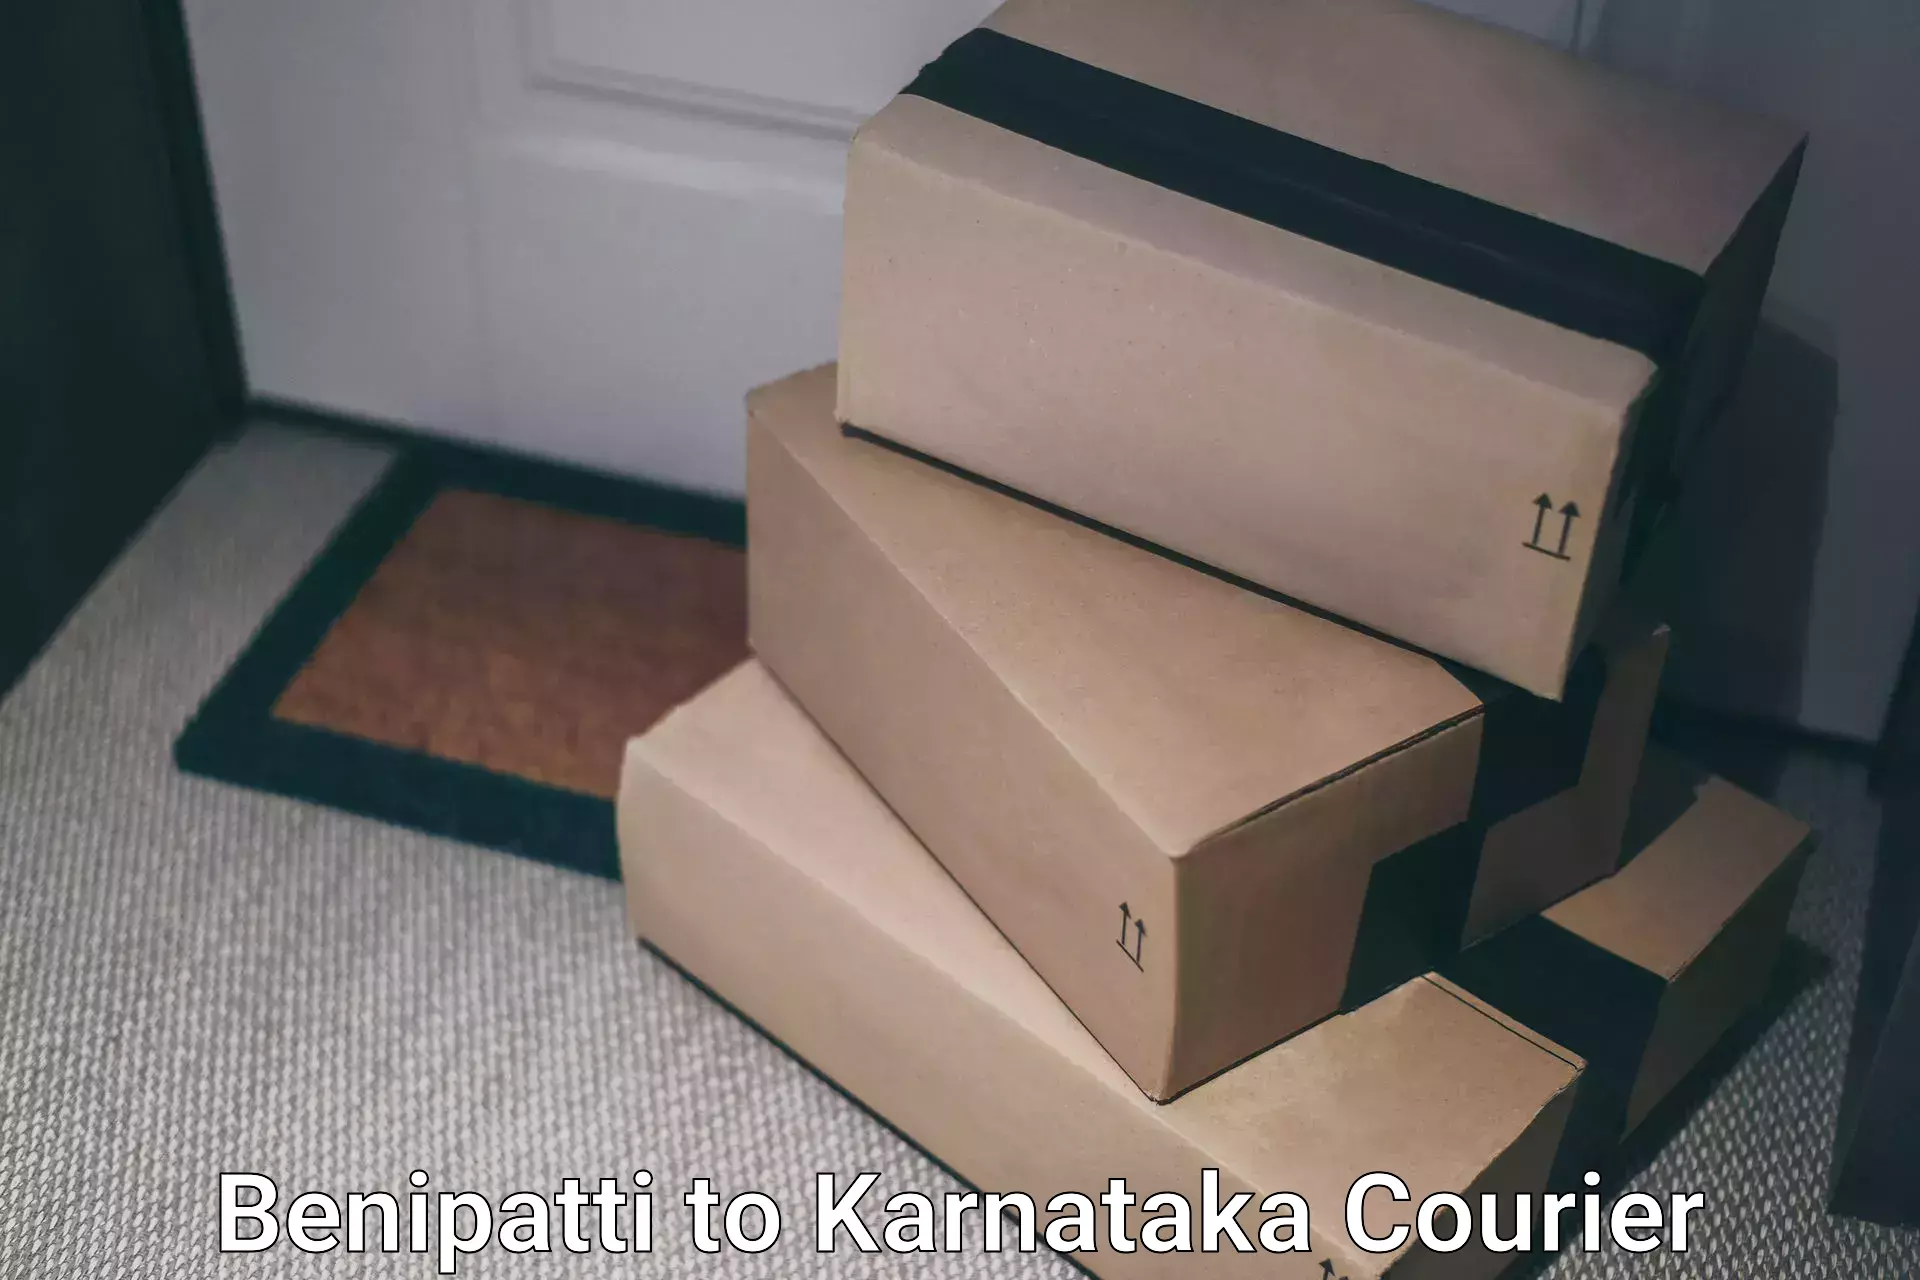 Small parcel delivery in Benipatti to Yellapur